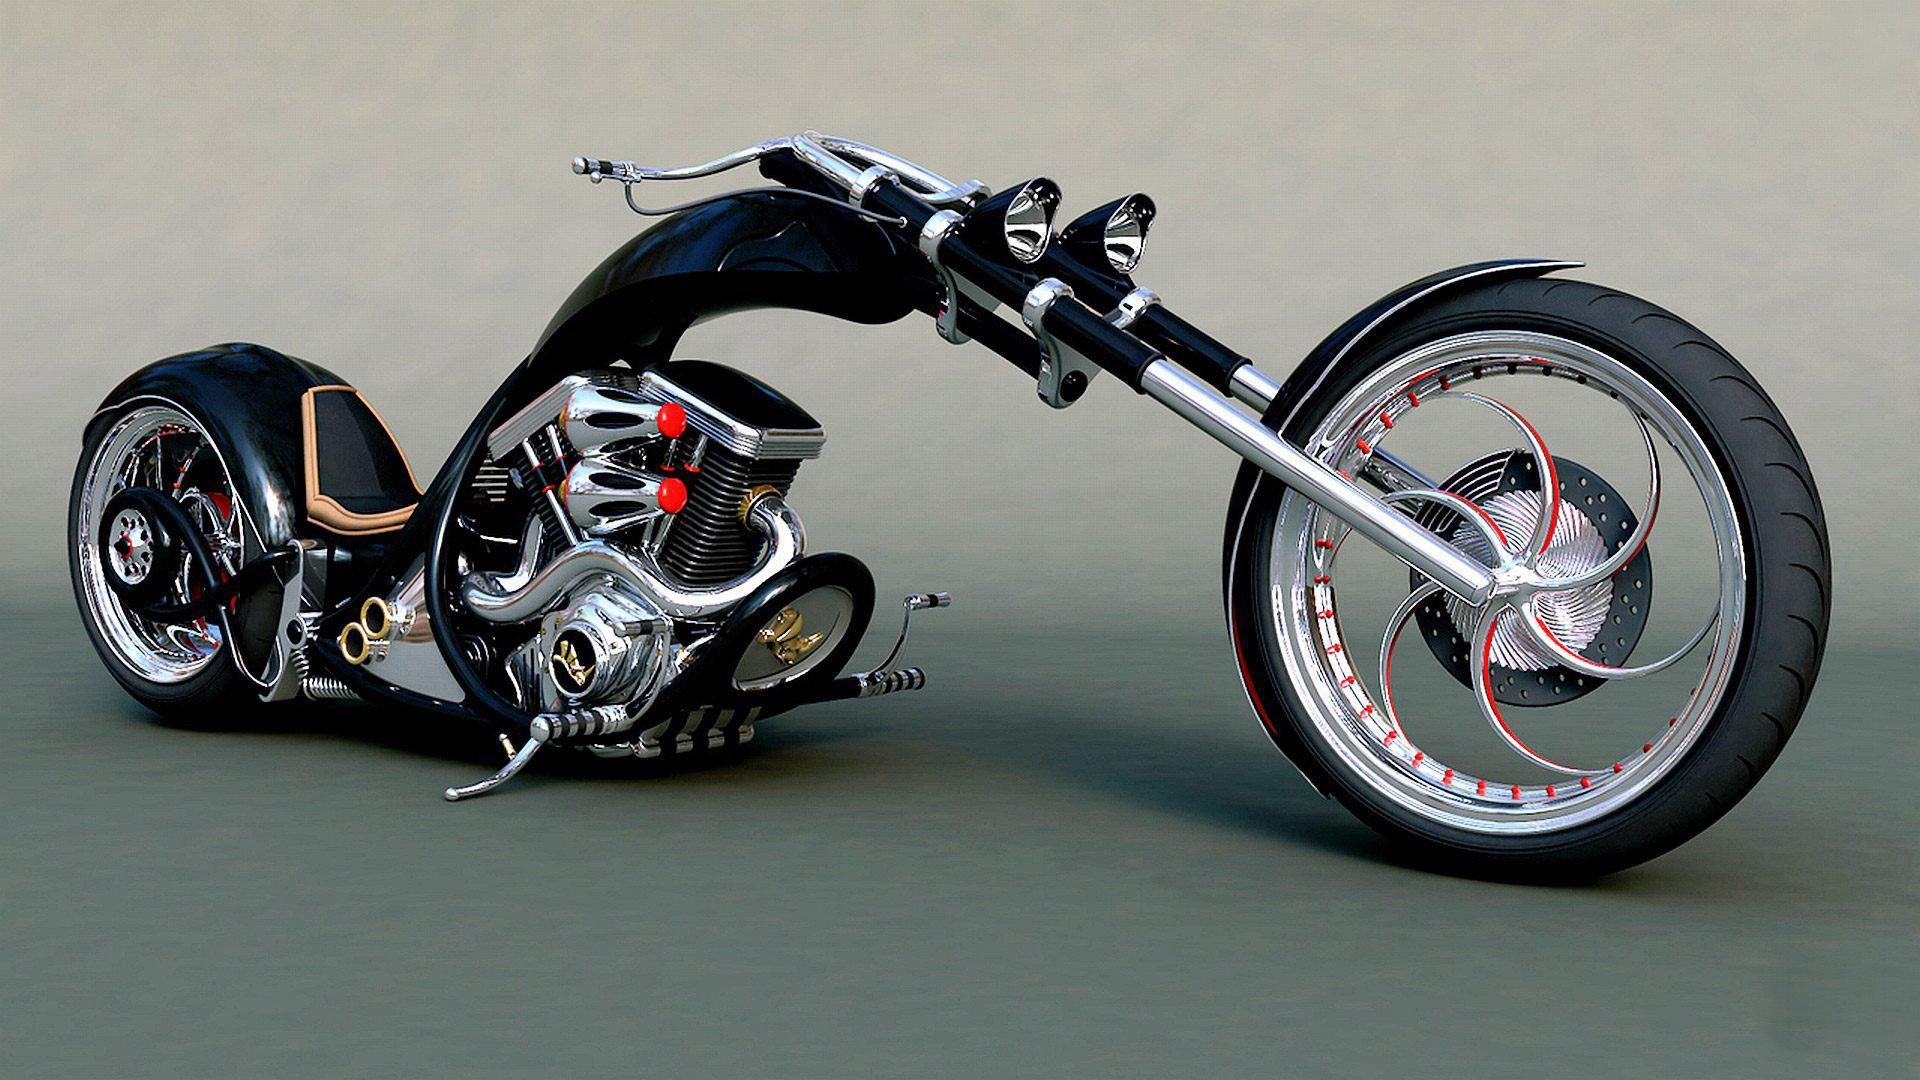 HD Chopper Bike Tuning Motorbike Motorcycle Hot Rod Rods